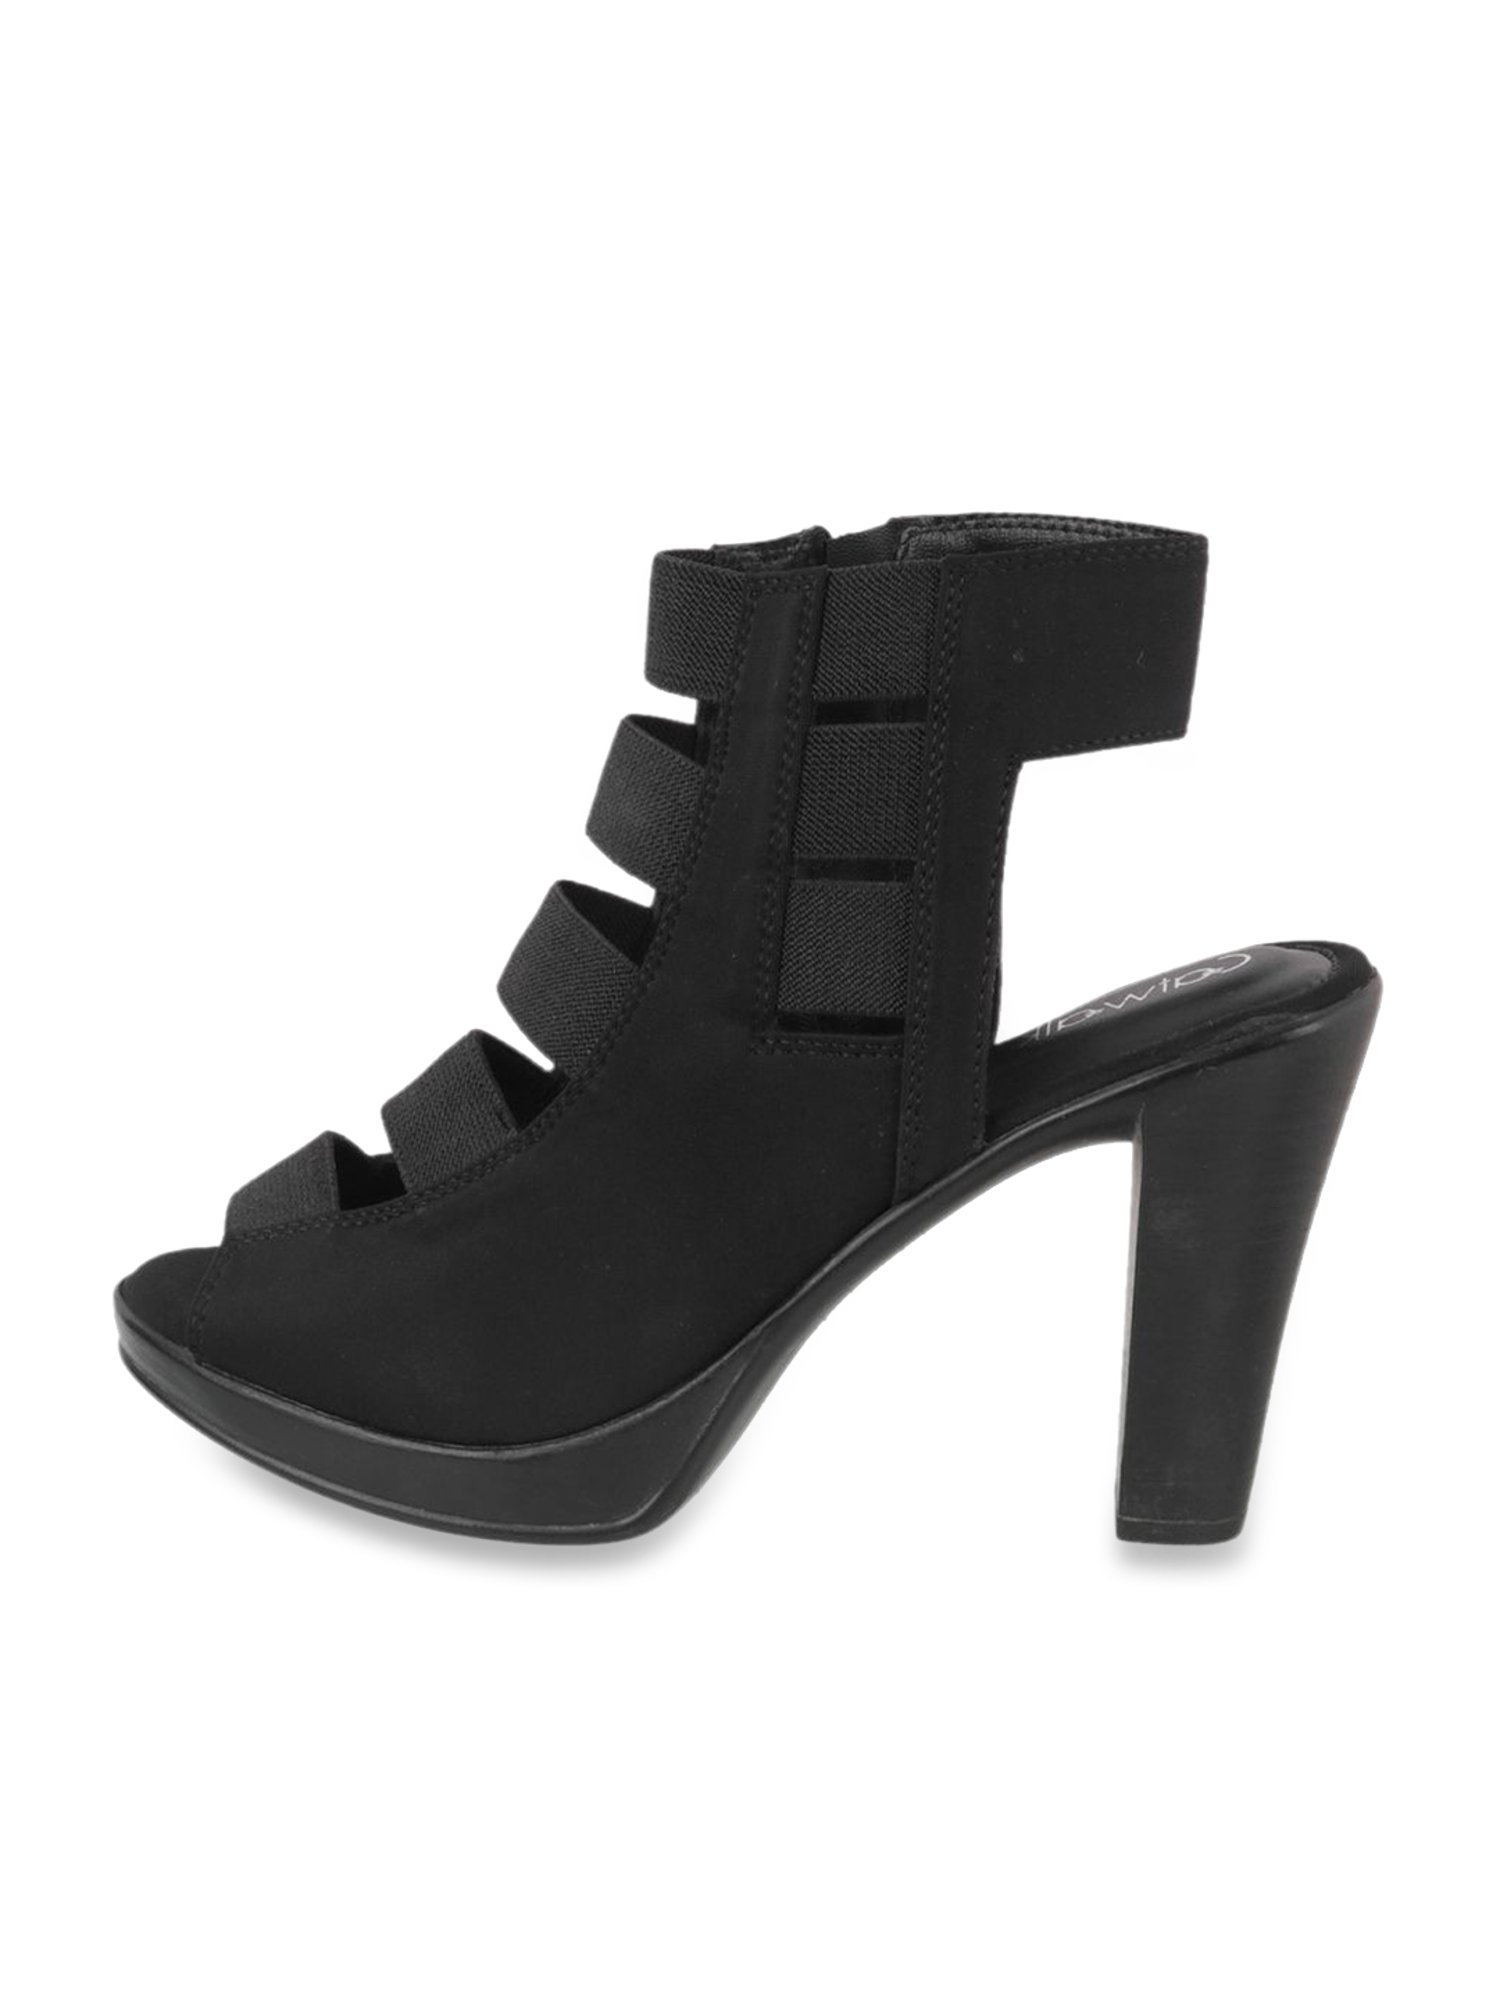 Luxury High Heels Sandals | Square Buckle High Heels | Catwalk Sandals Heels  - Metal - Aliexpress